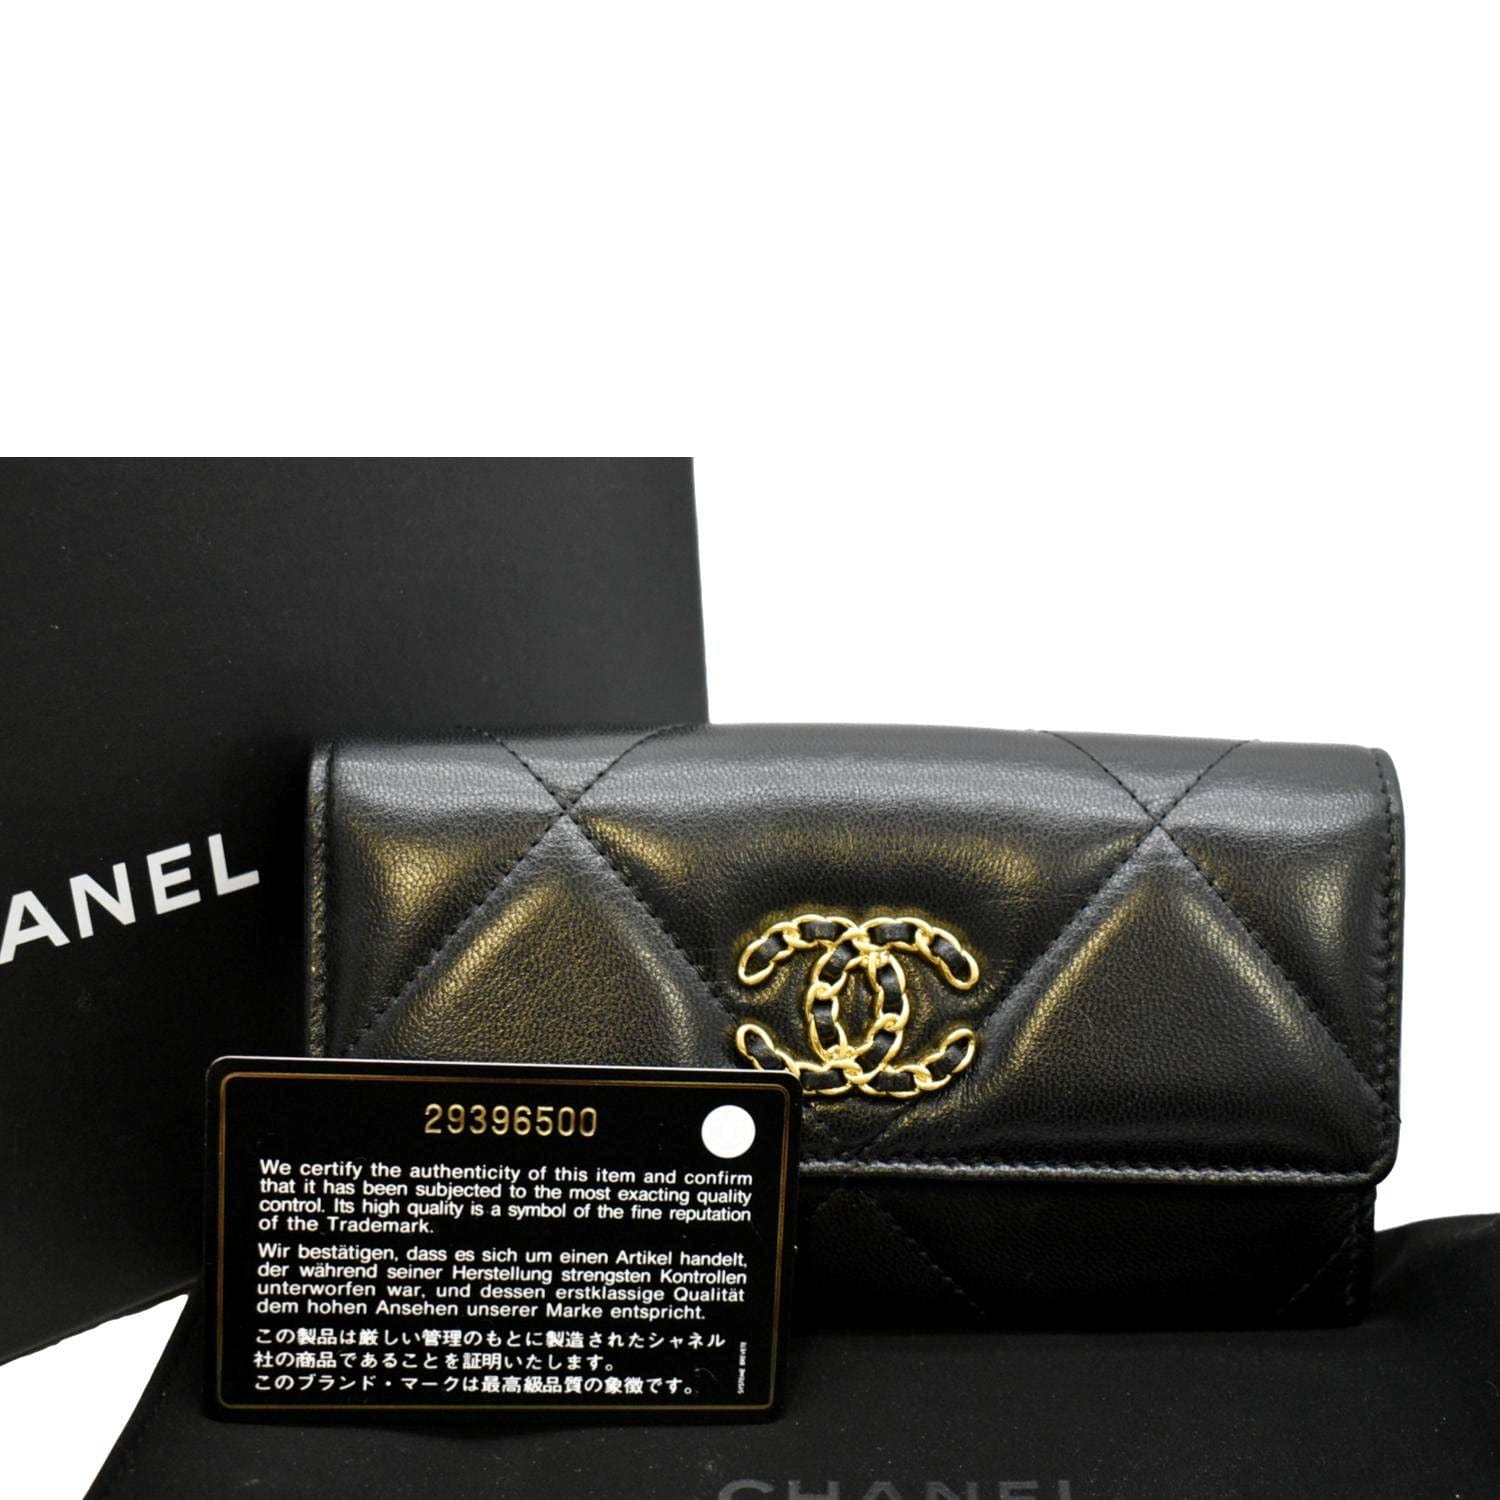 How To Spot Fake Vs Real Chanel Wallet – LegitGrails